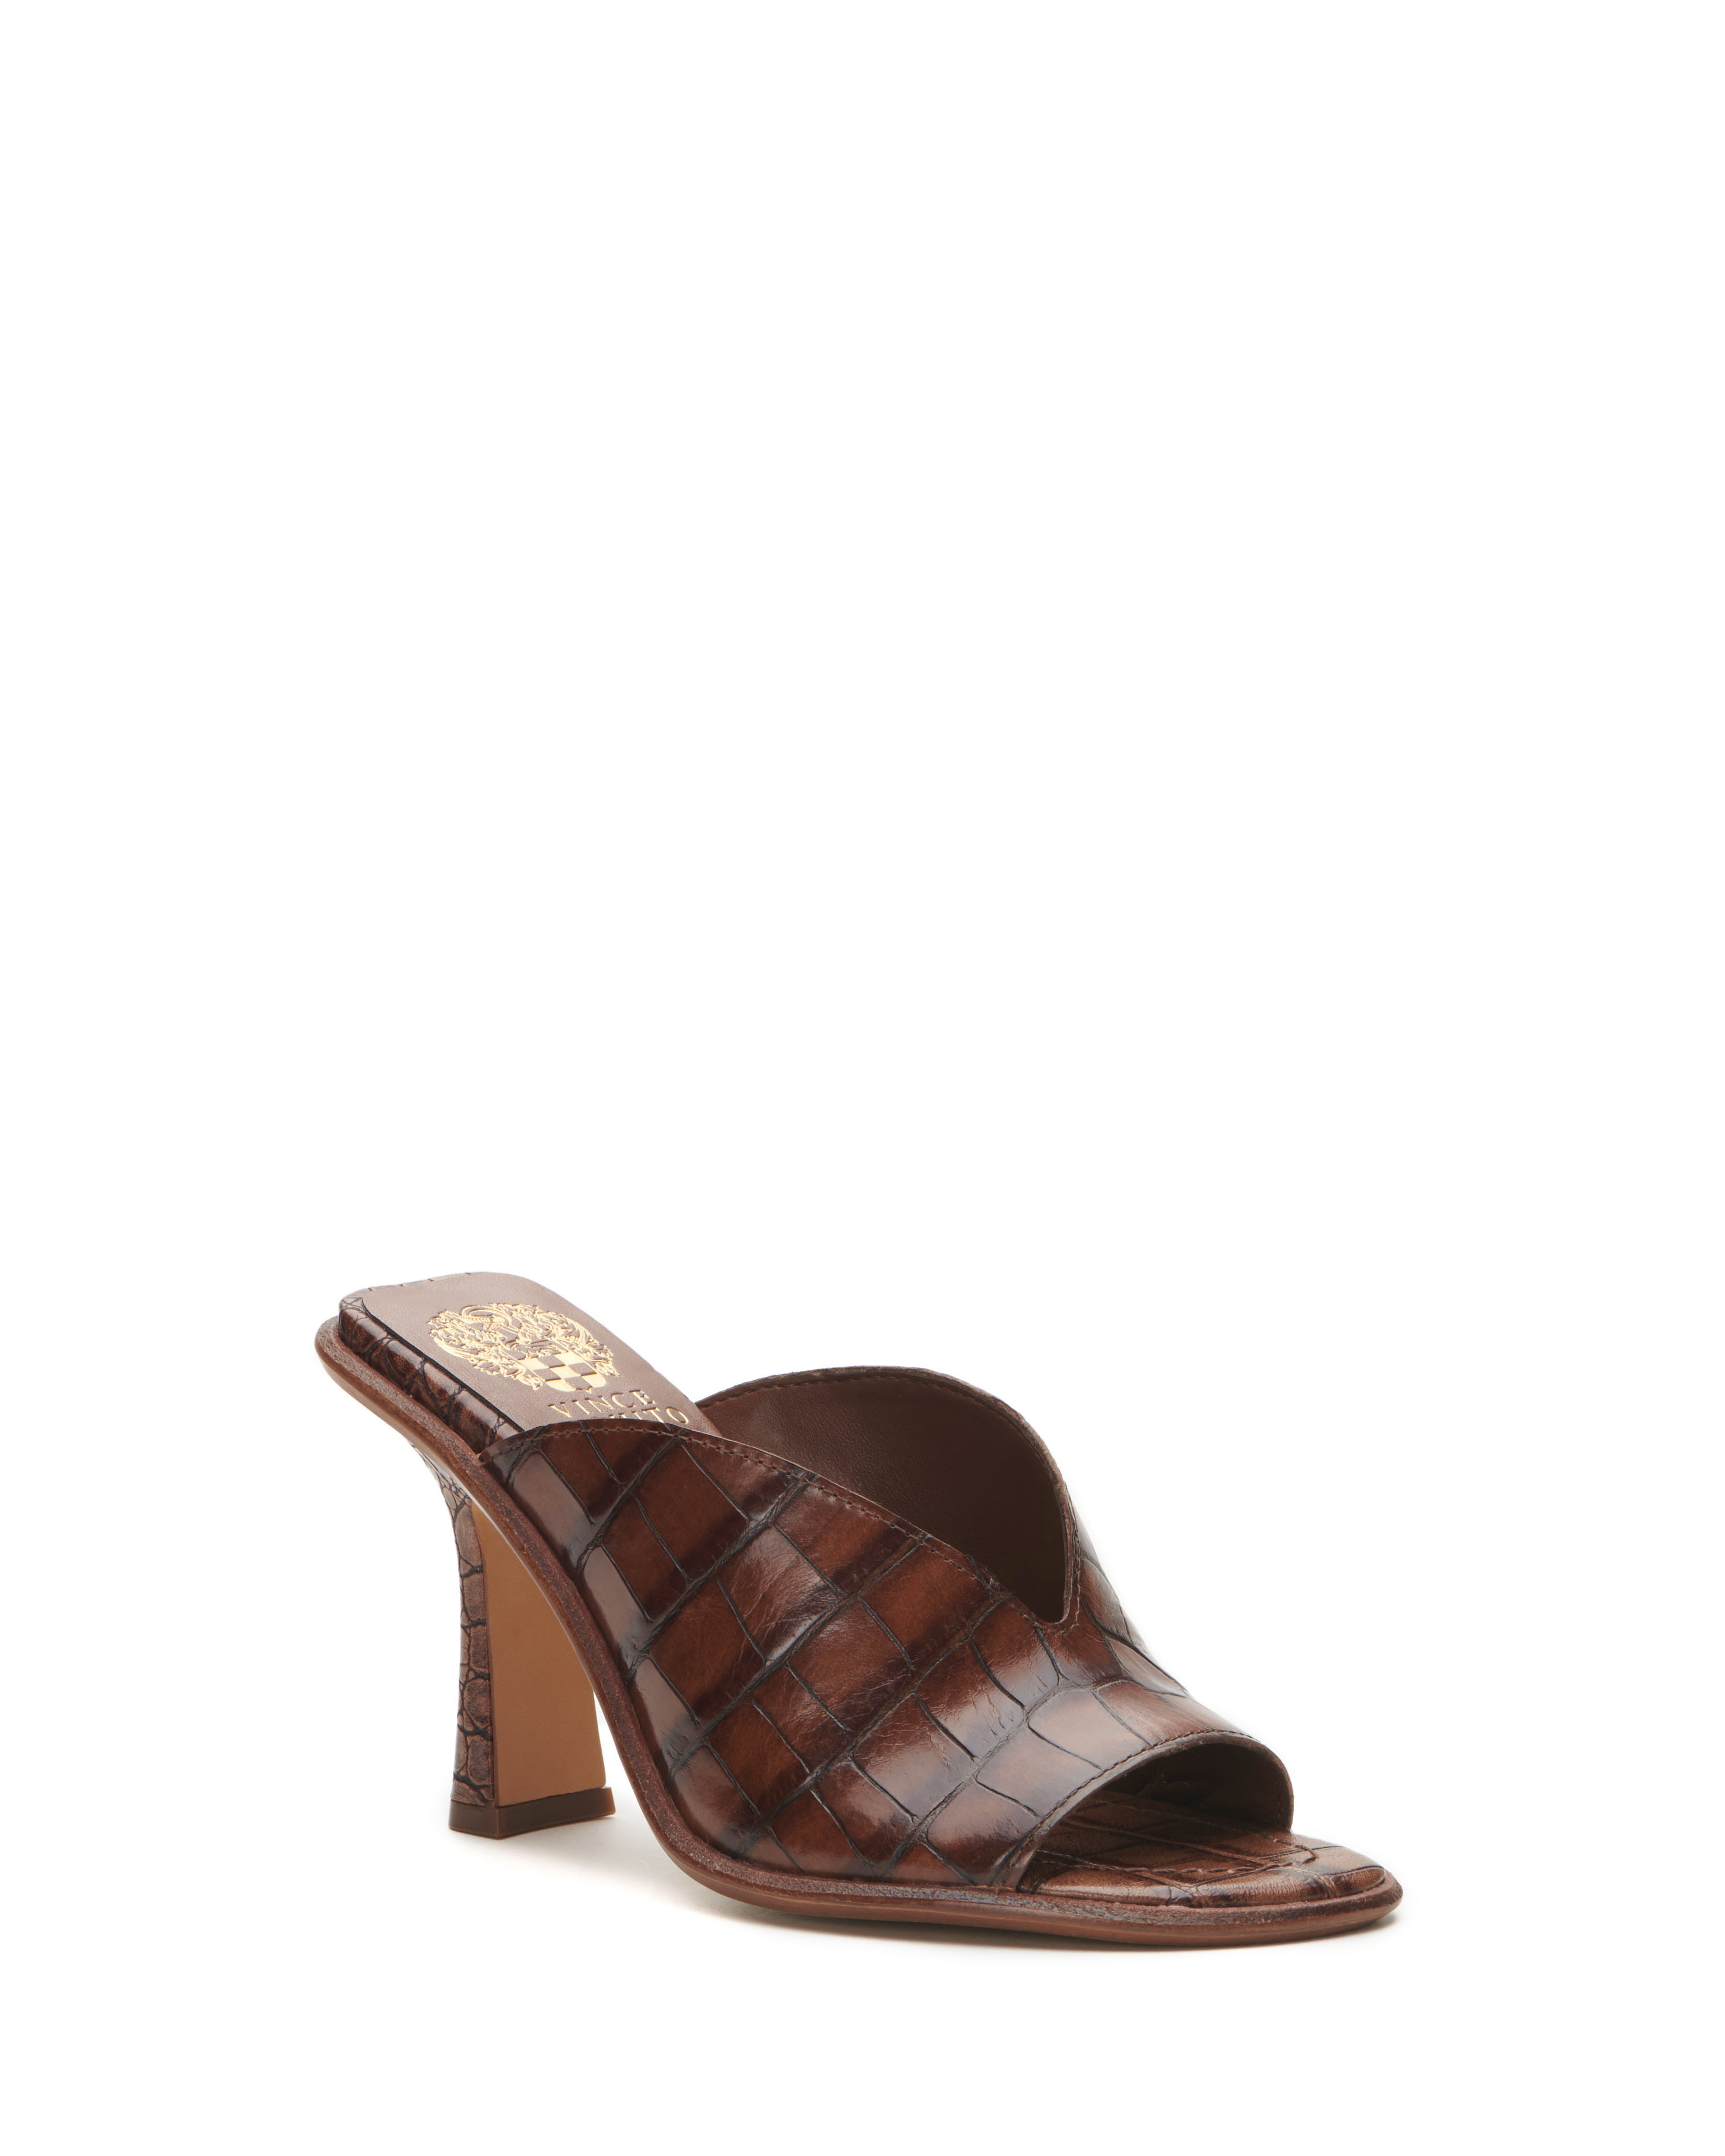 Women's Vince Camuto Mershid Mules Shoes Size 6.5 Rich Cocoa Croc Print